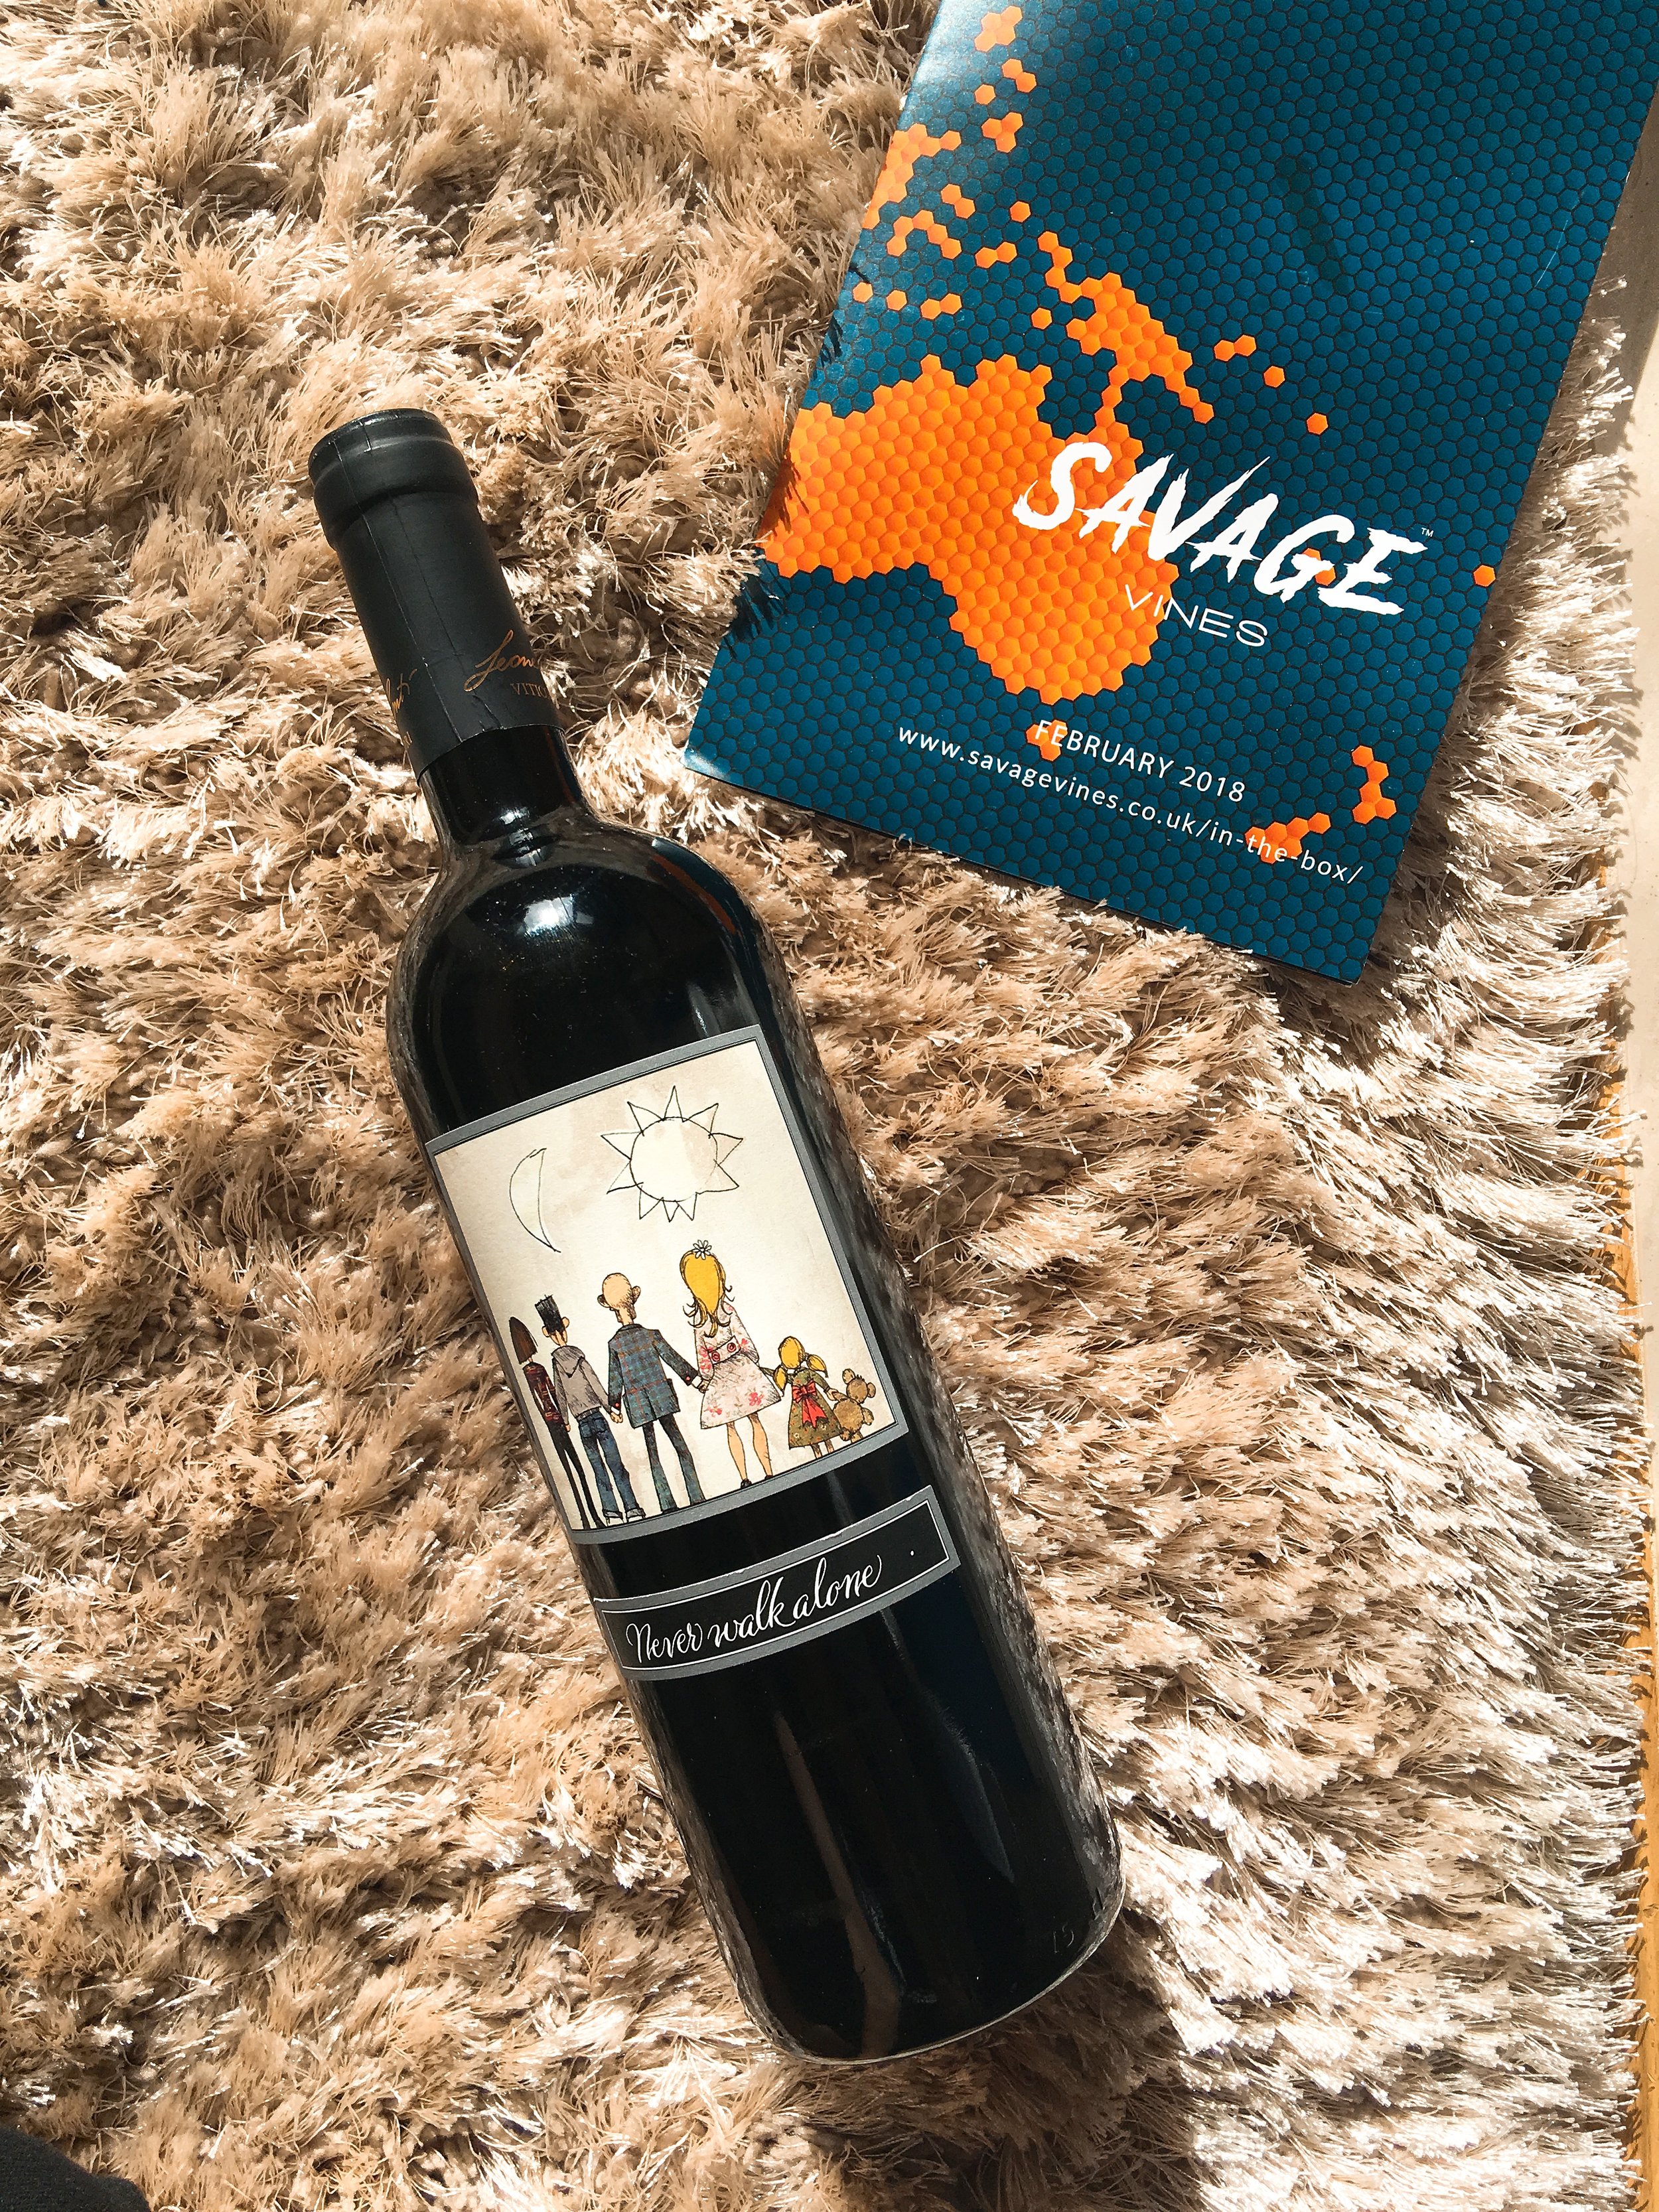 Savage wines review